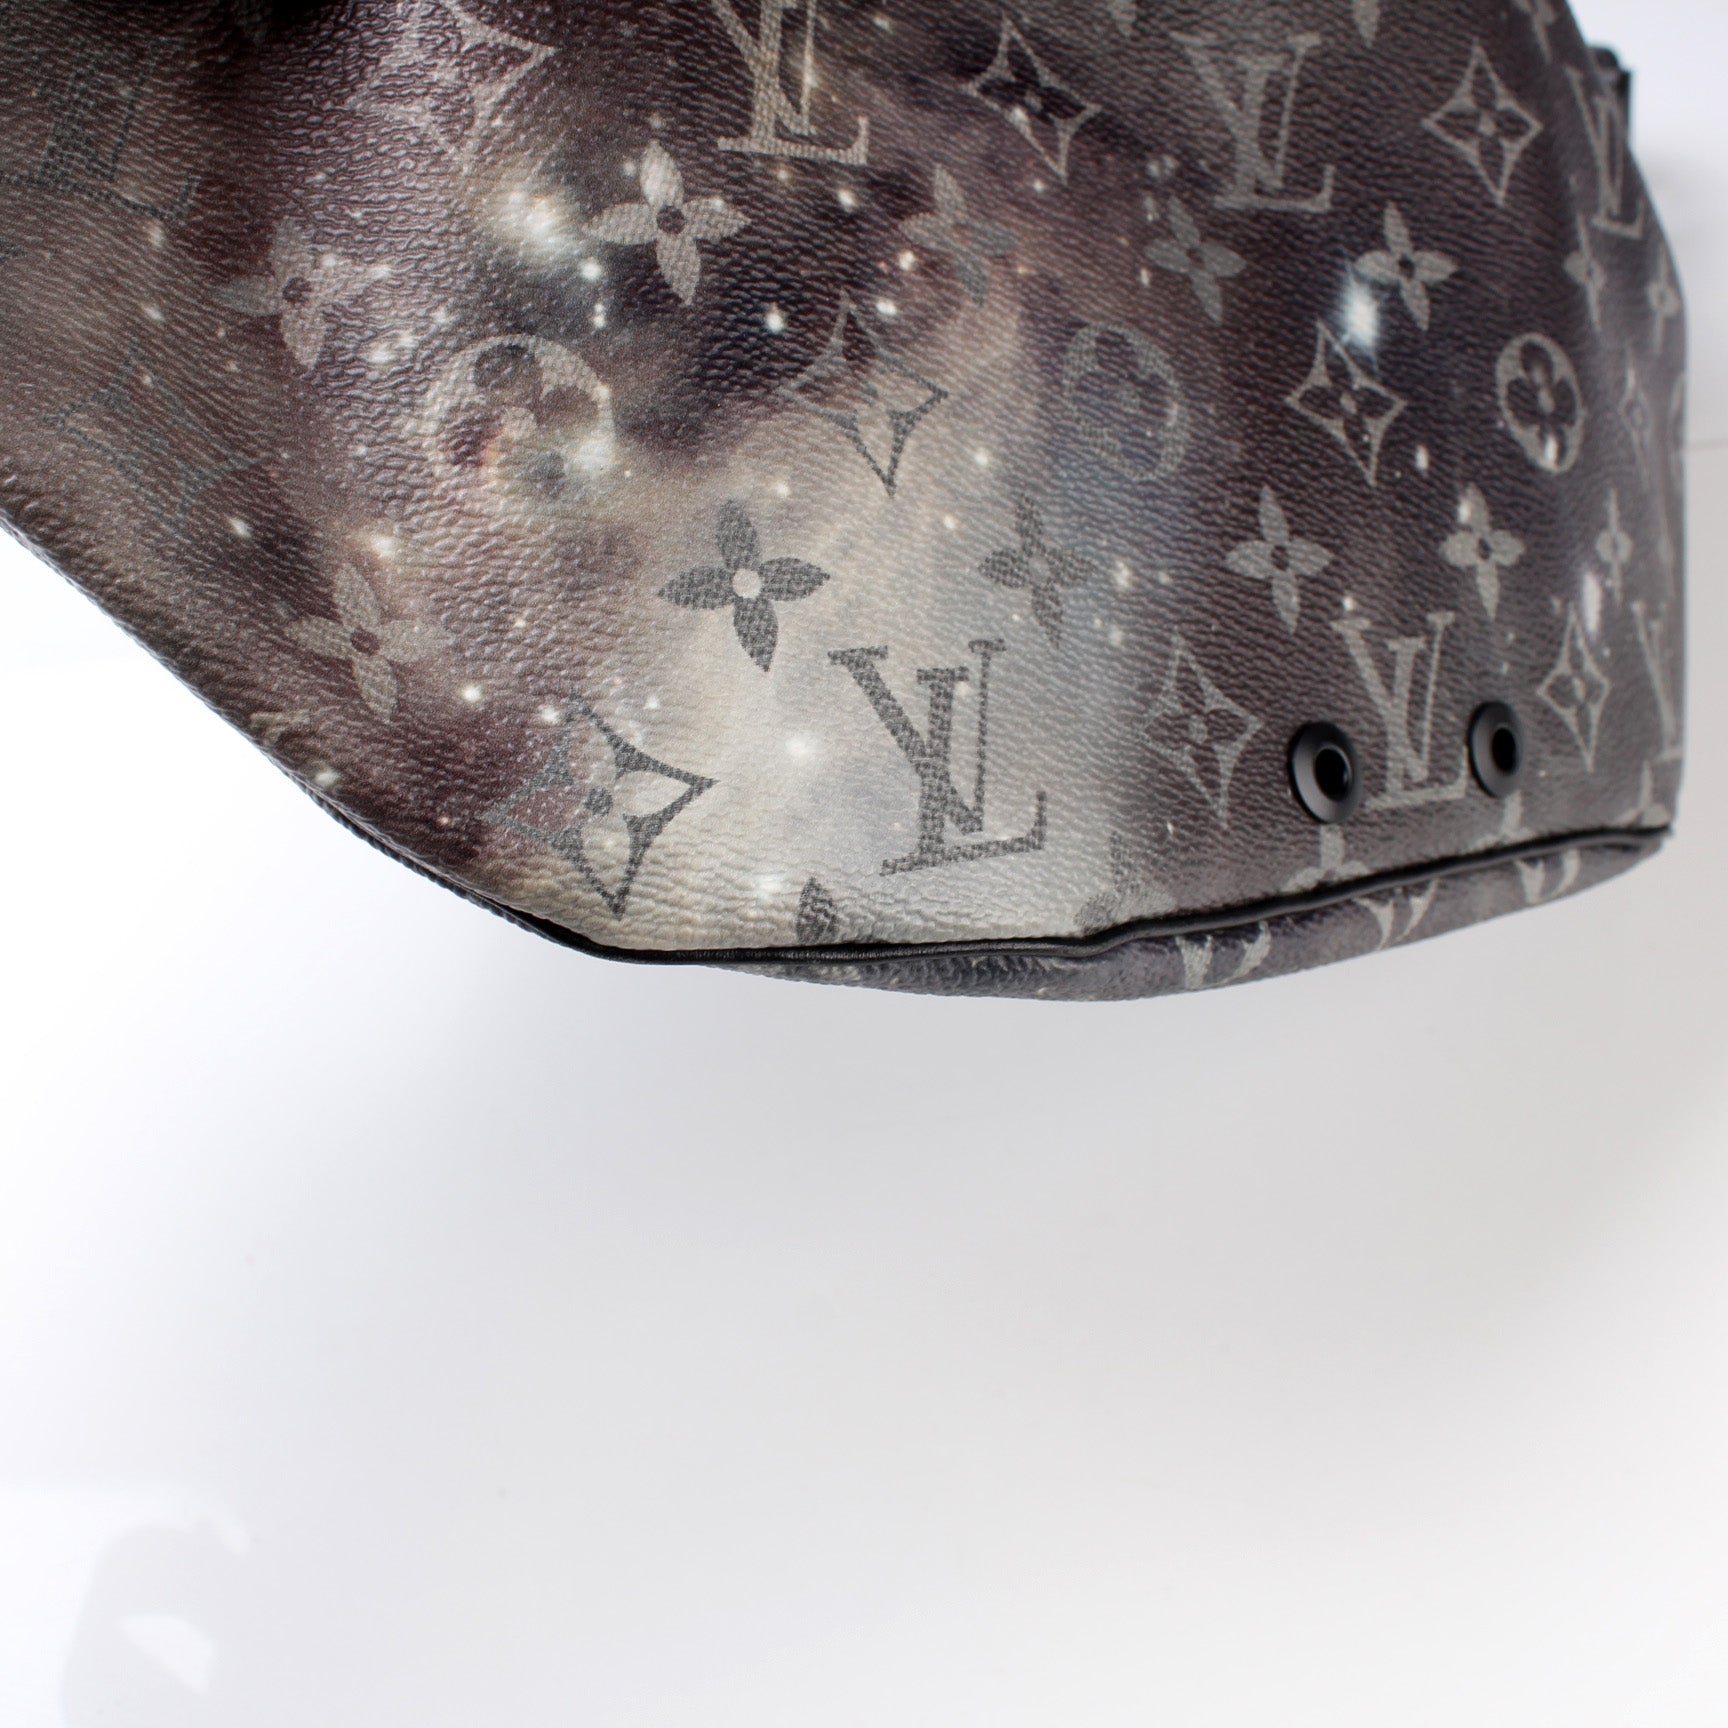 Louis Vuitton Monogram Galaxy Discovery Bumbag